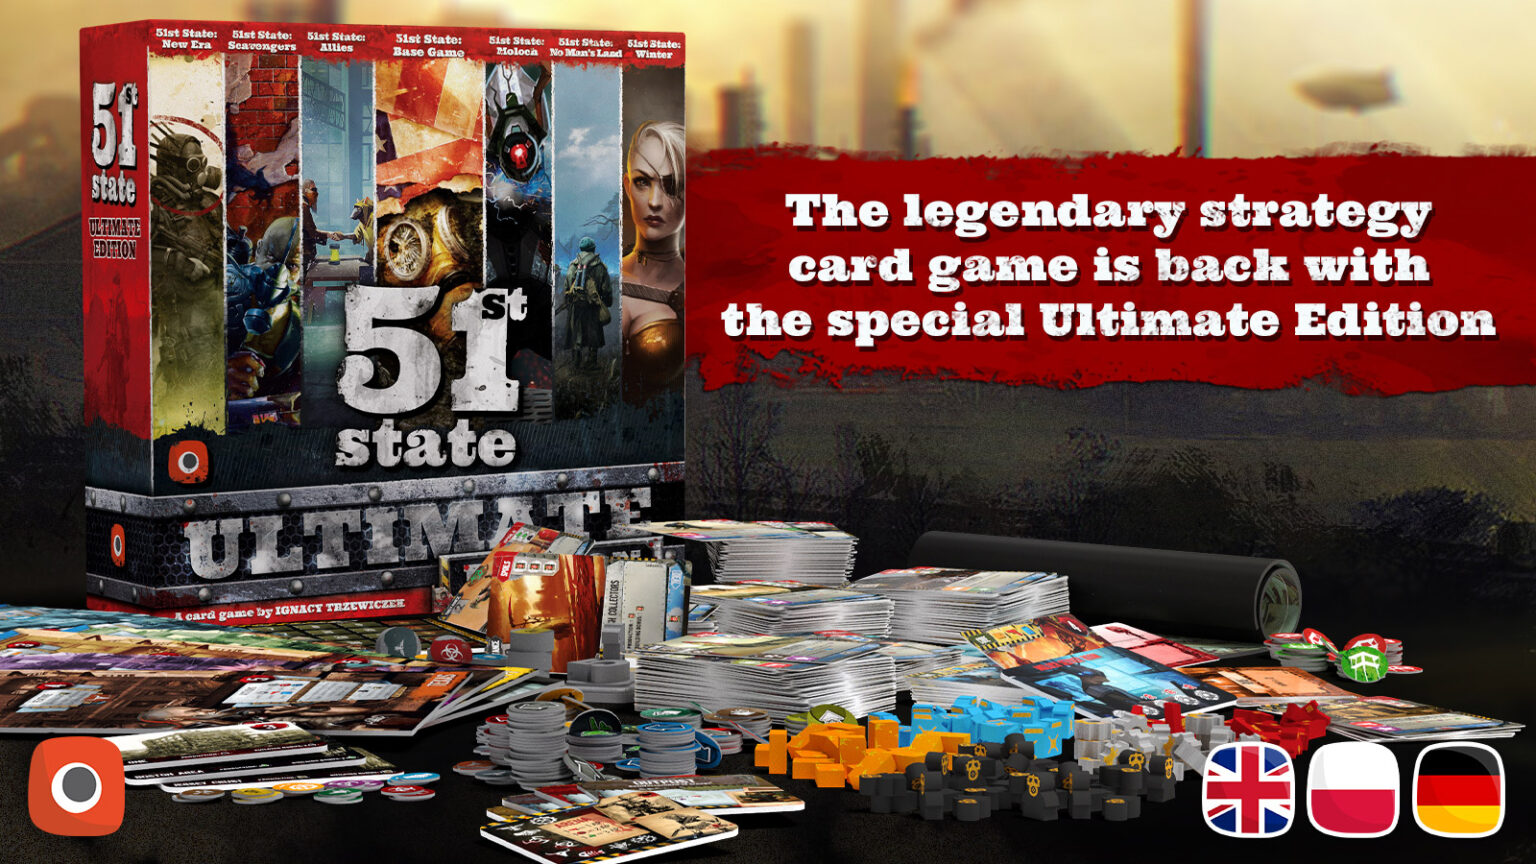 Настолна игра 51st State (Ultimate Edition) - стратегическа